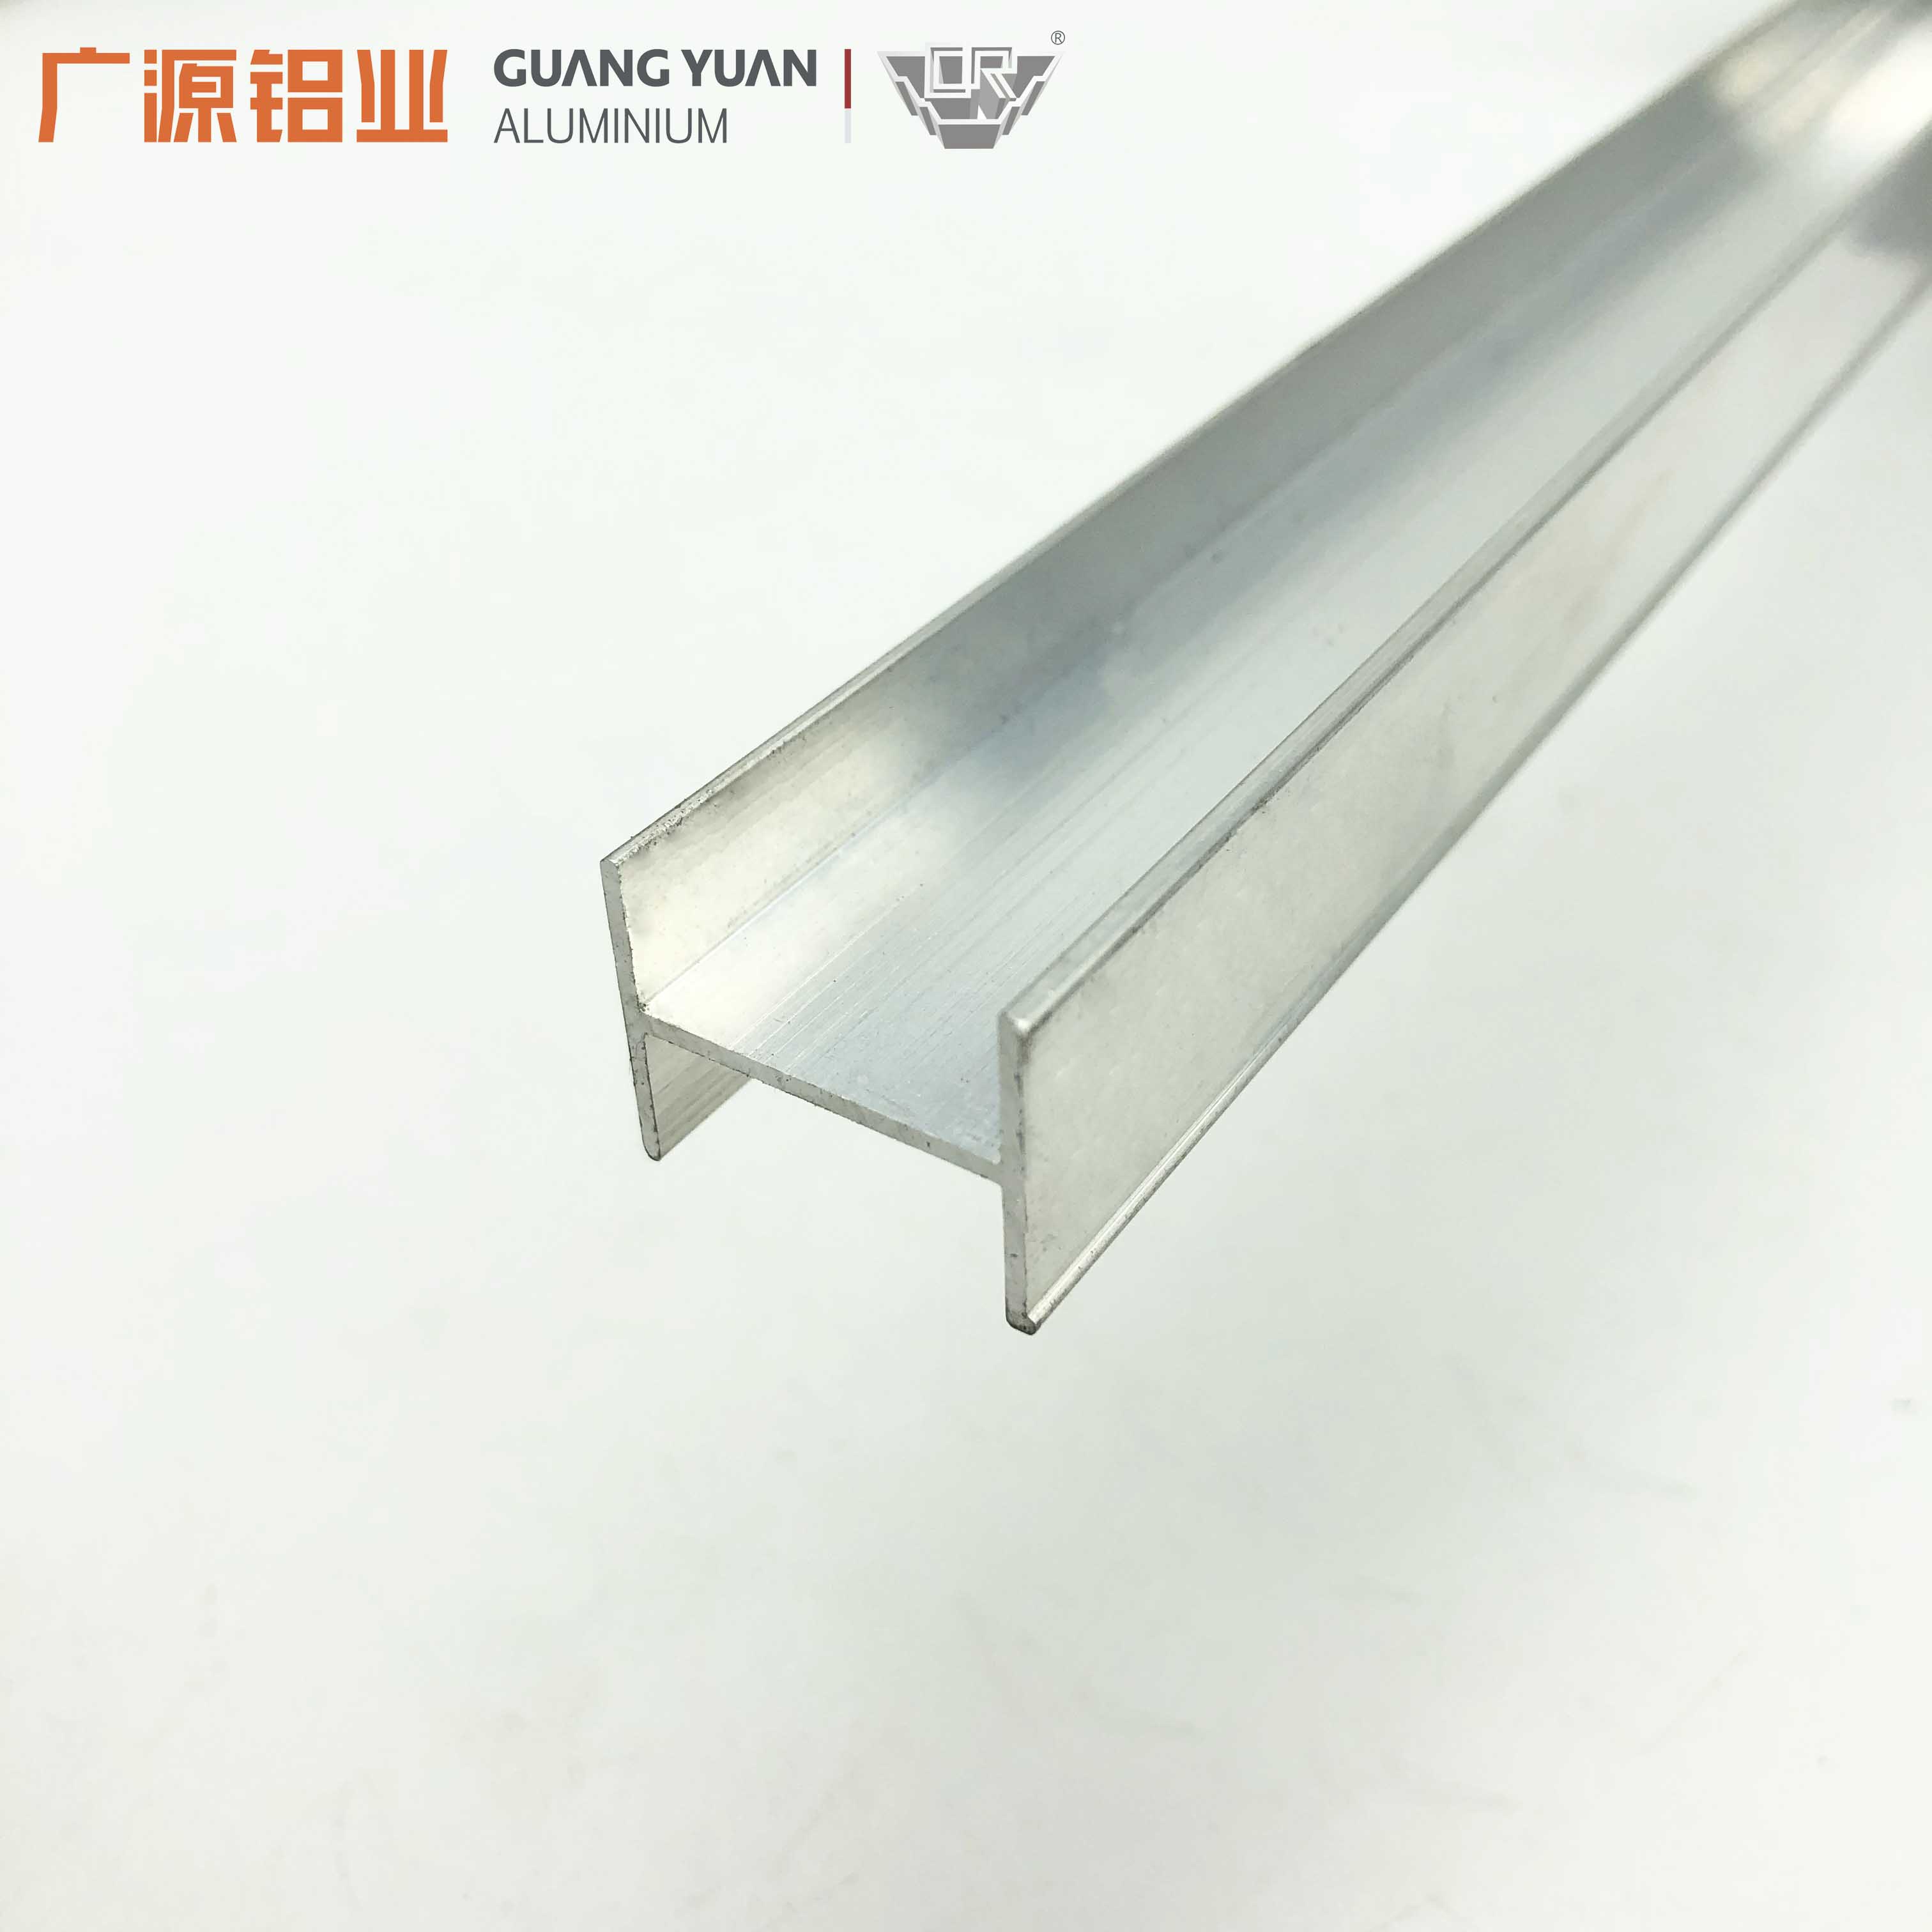 Welding Aluminium Tube Metal 1" Diameter Milling Metalworking 